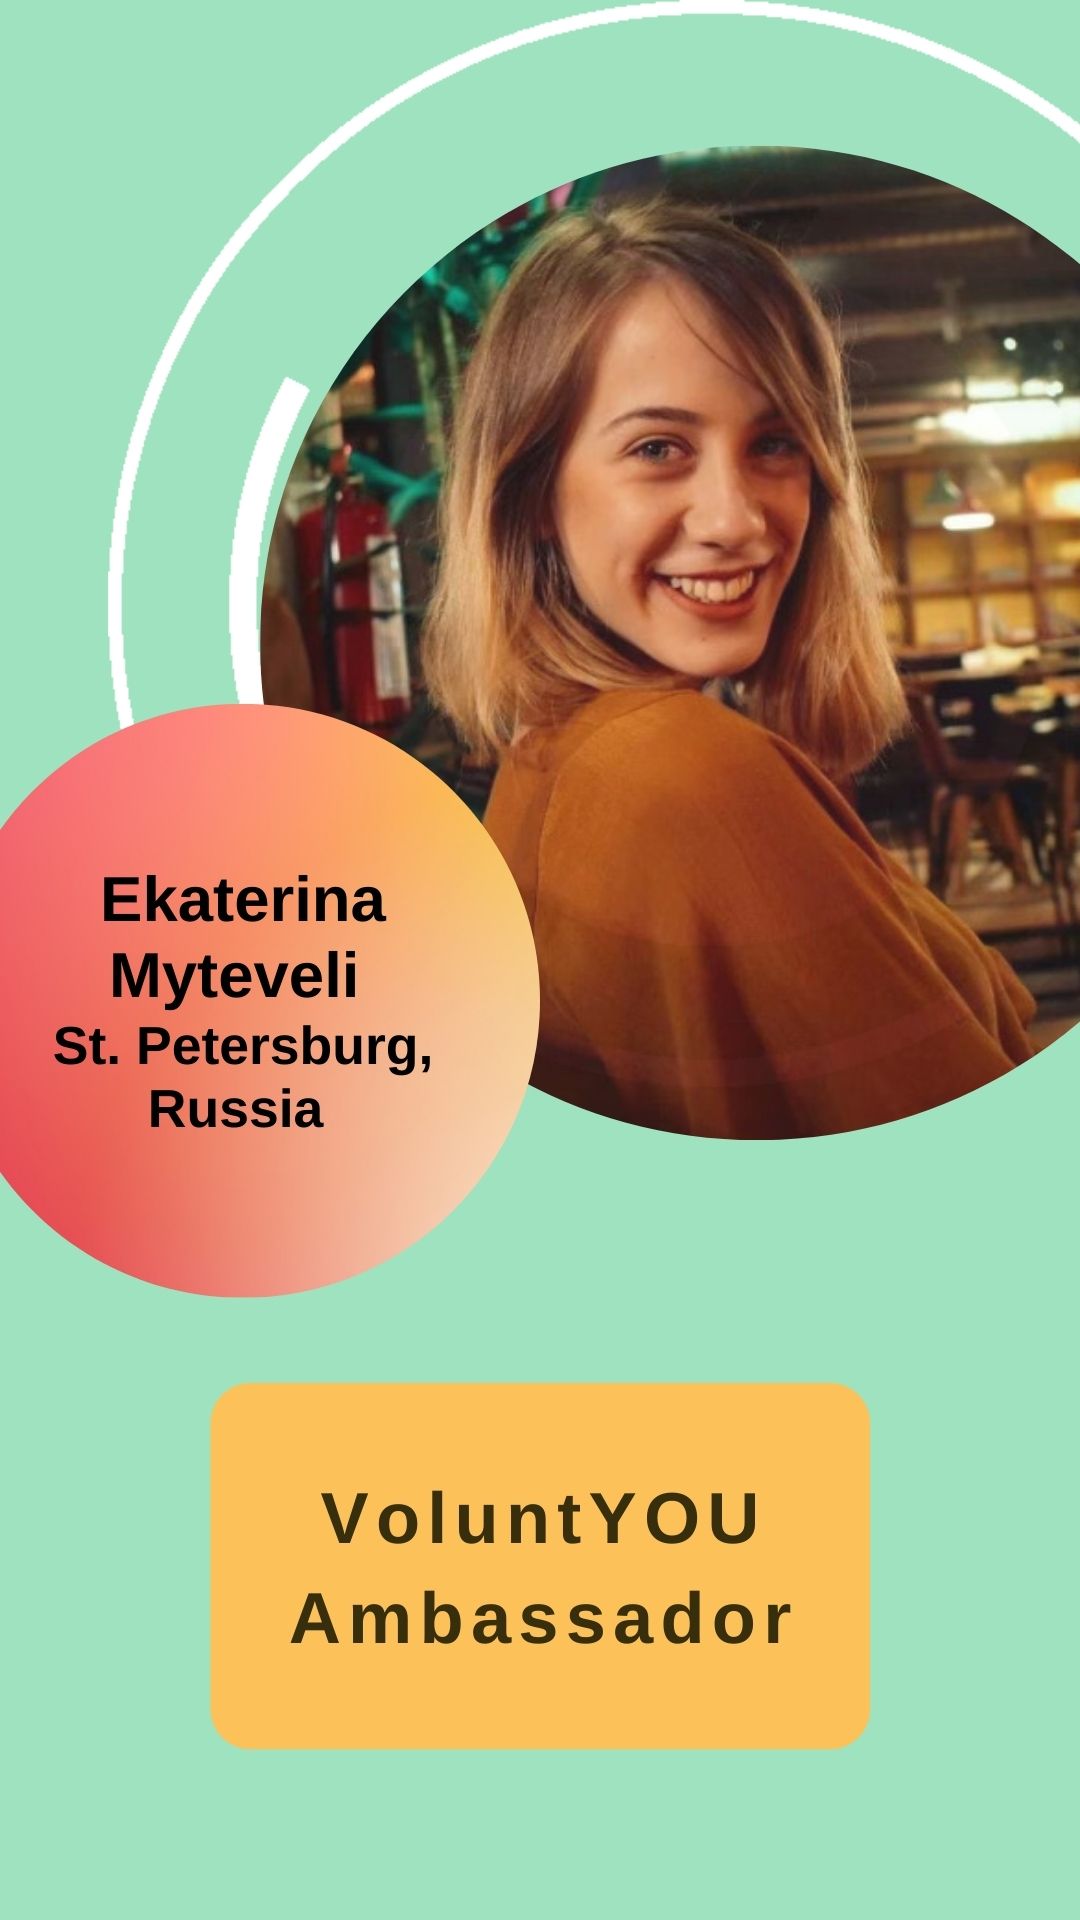 Ekaterina Myteveli - VoluntYOU Ambassador; St. Petersburg, Russia